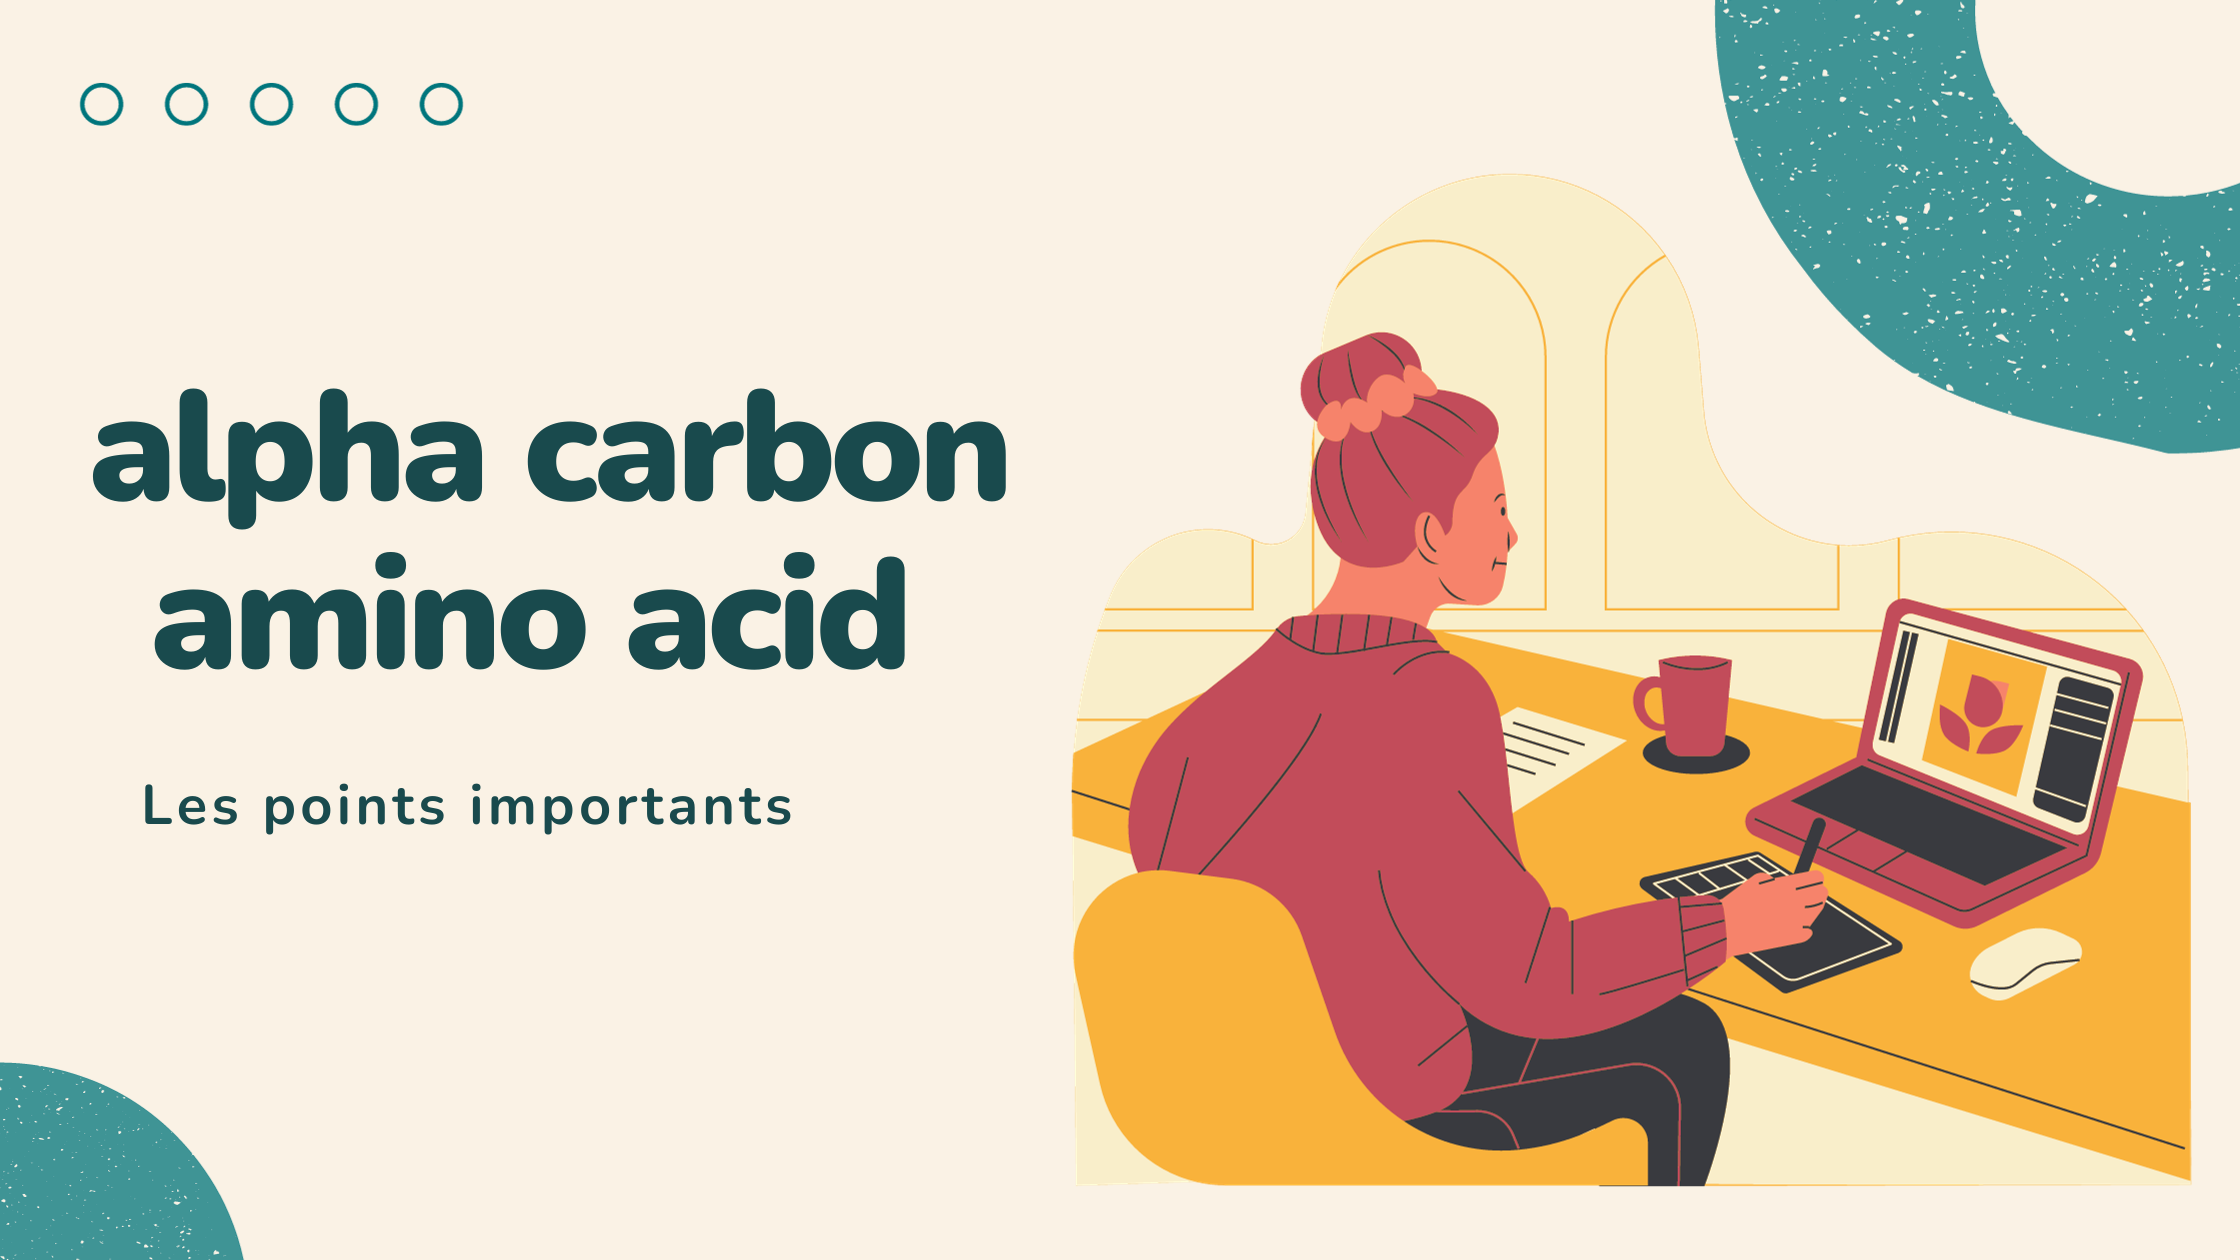 alpha carbon amino acid | Les points importants